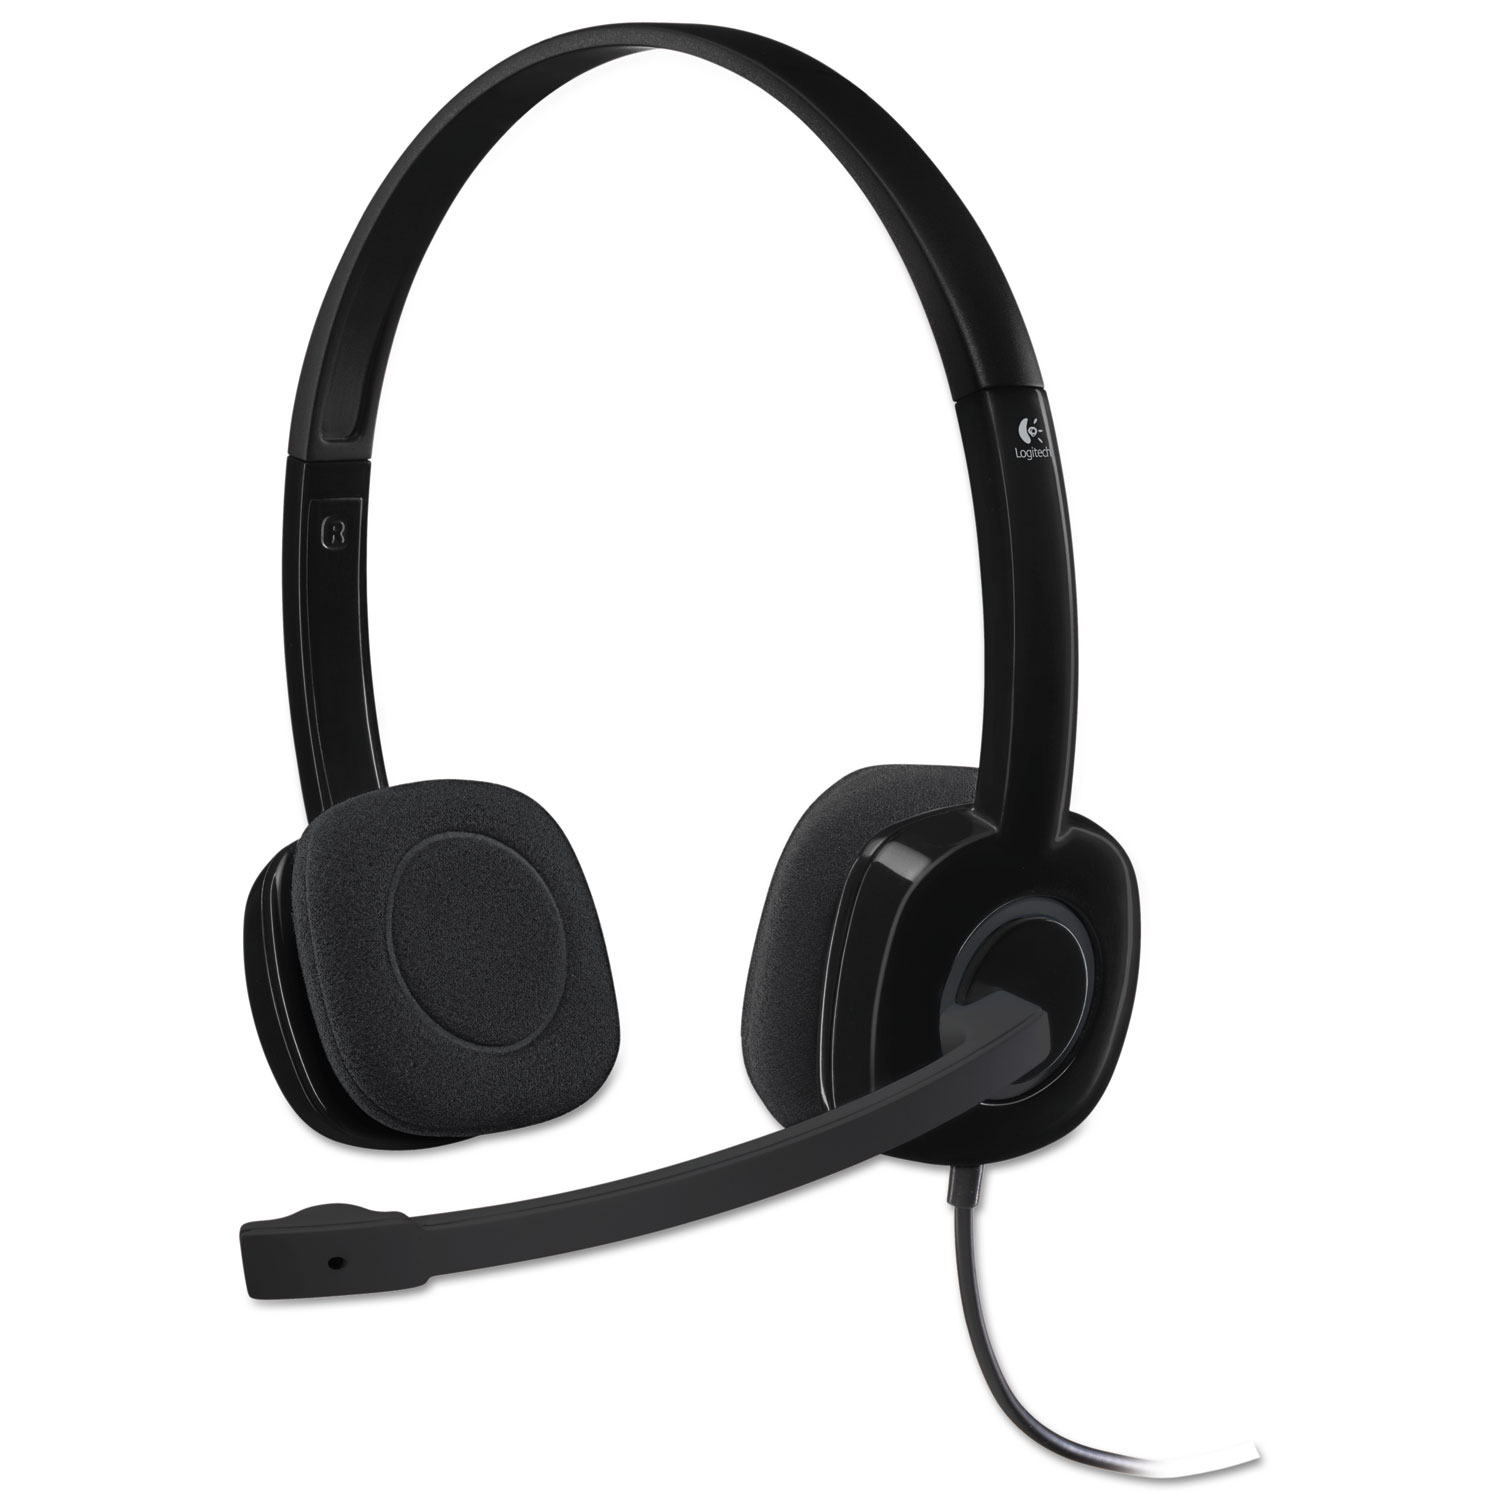  Logitech 981-000587 H151 Binaural Over-the-Head Stereo Headset, Black (LOG981000587) 